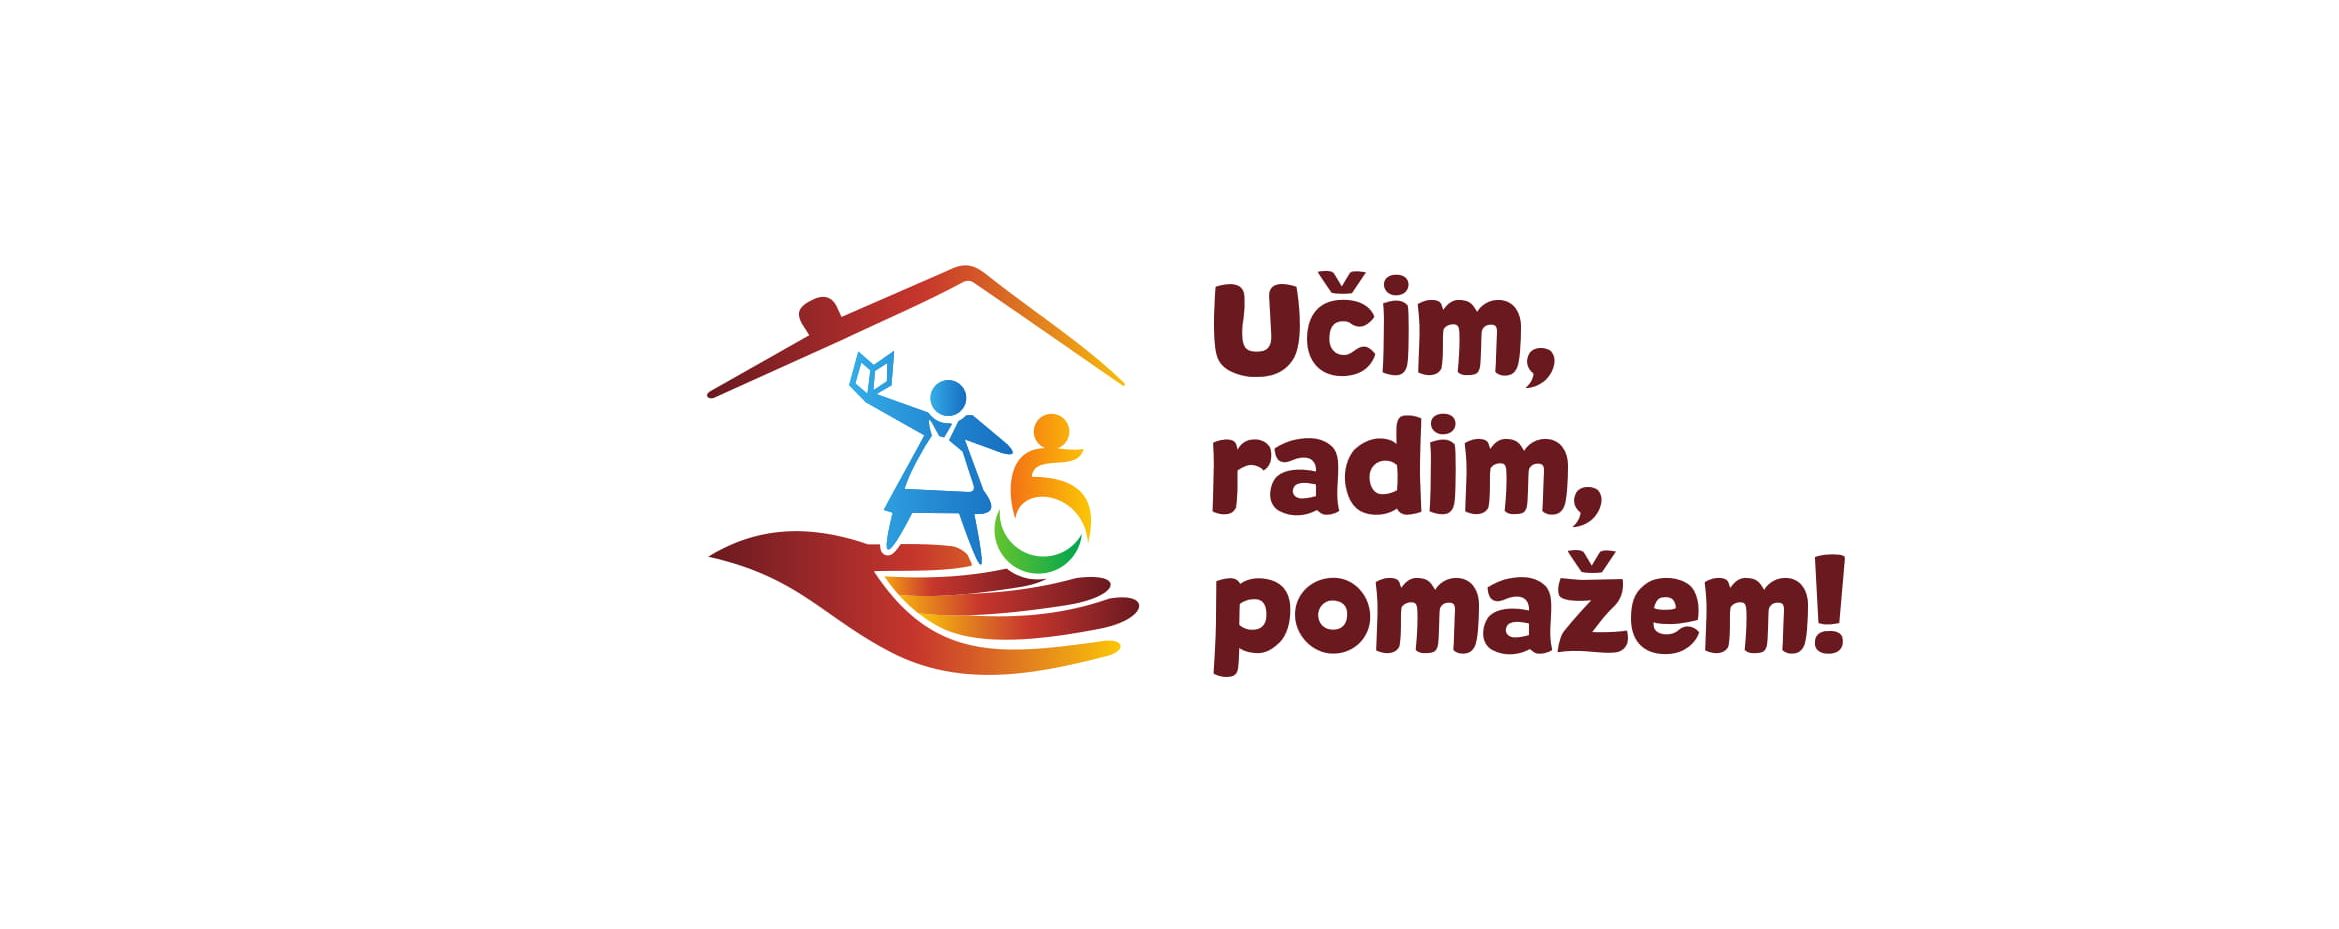 UCIM RADIM POMAZEM Logotip 2 e1551782152941